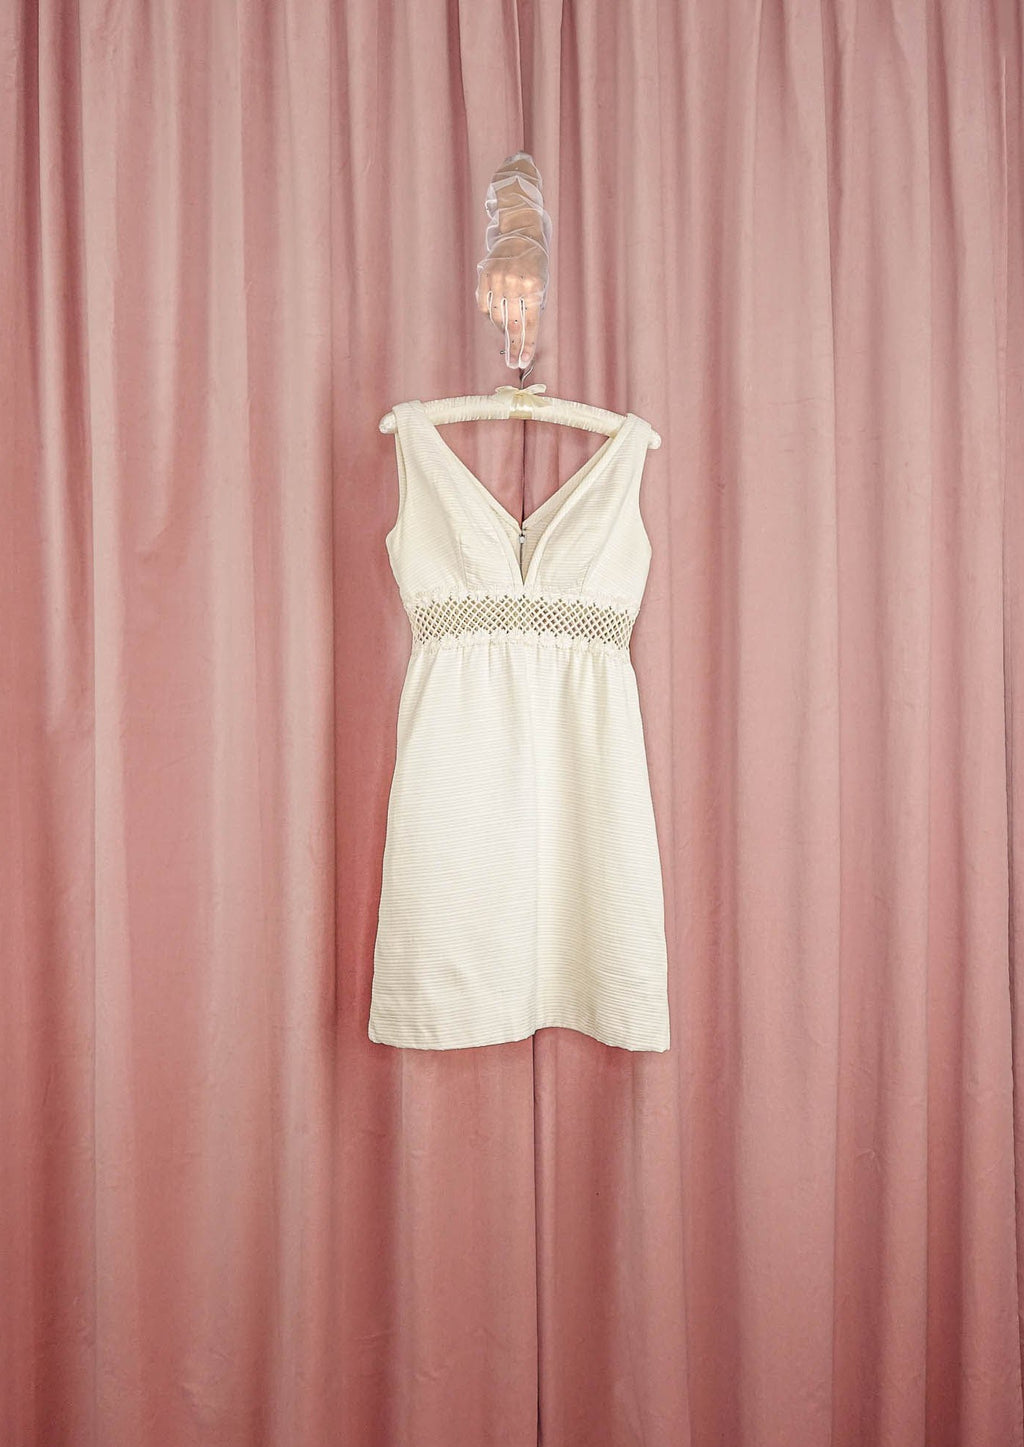 1960s White Daisy Cage Mini Dress